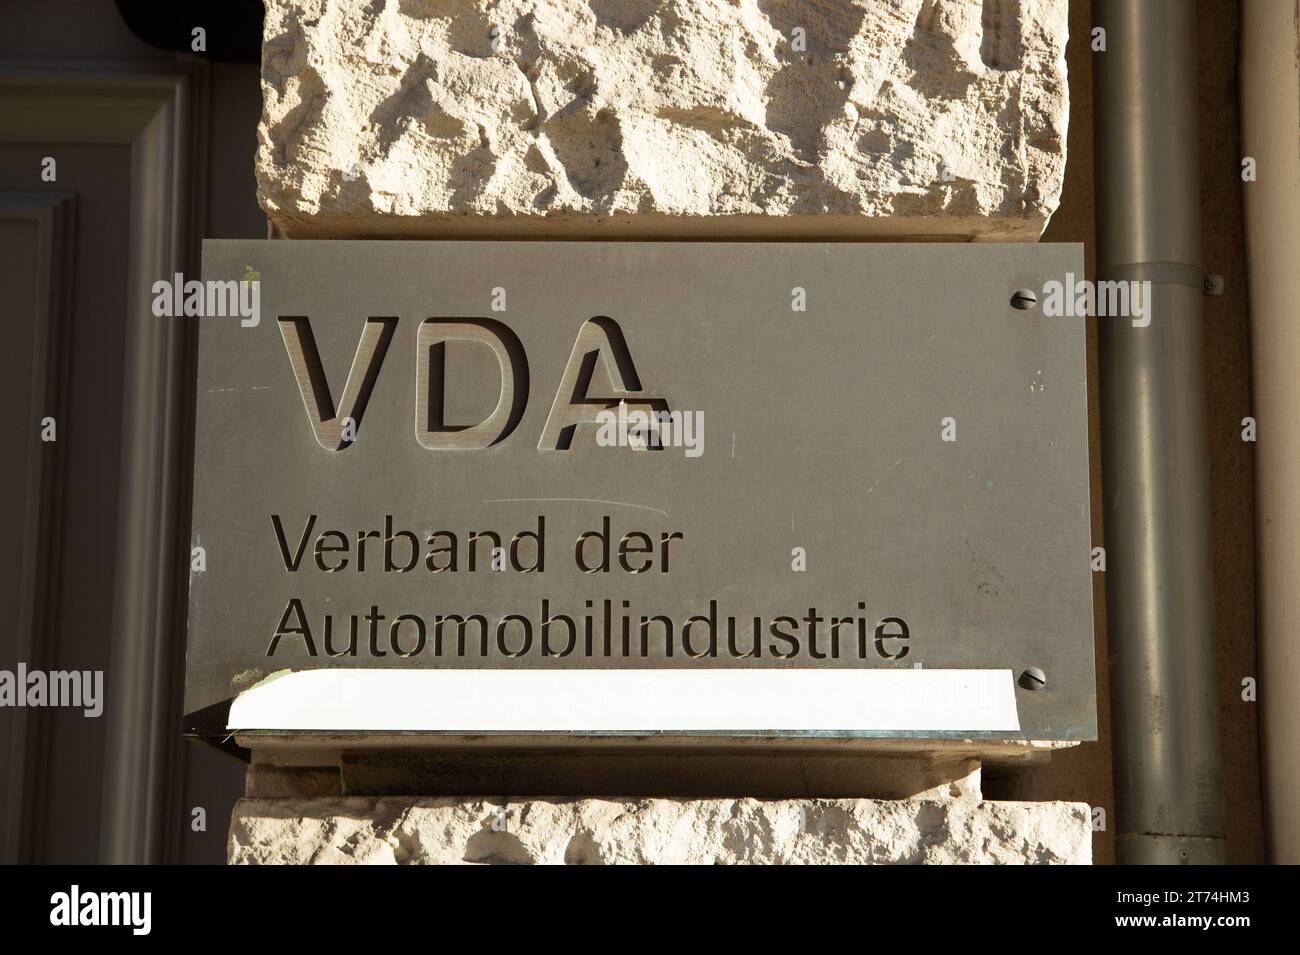 VDA Verband der Automobilindustrie Firmenschild in Berlin *** VDA German Association of the Automotive Industry Company sign in Berlin Credit: Imago/Alamy Live News Stock Photo